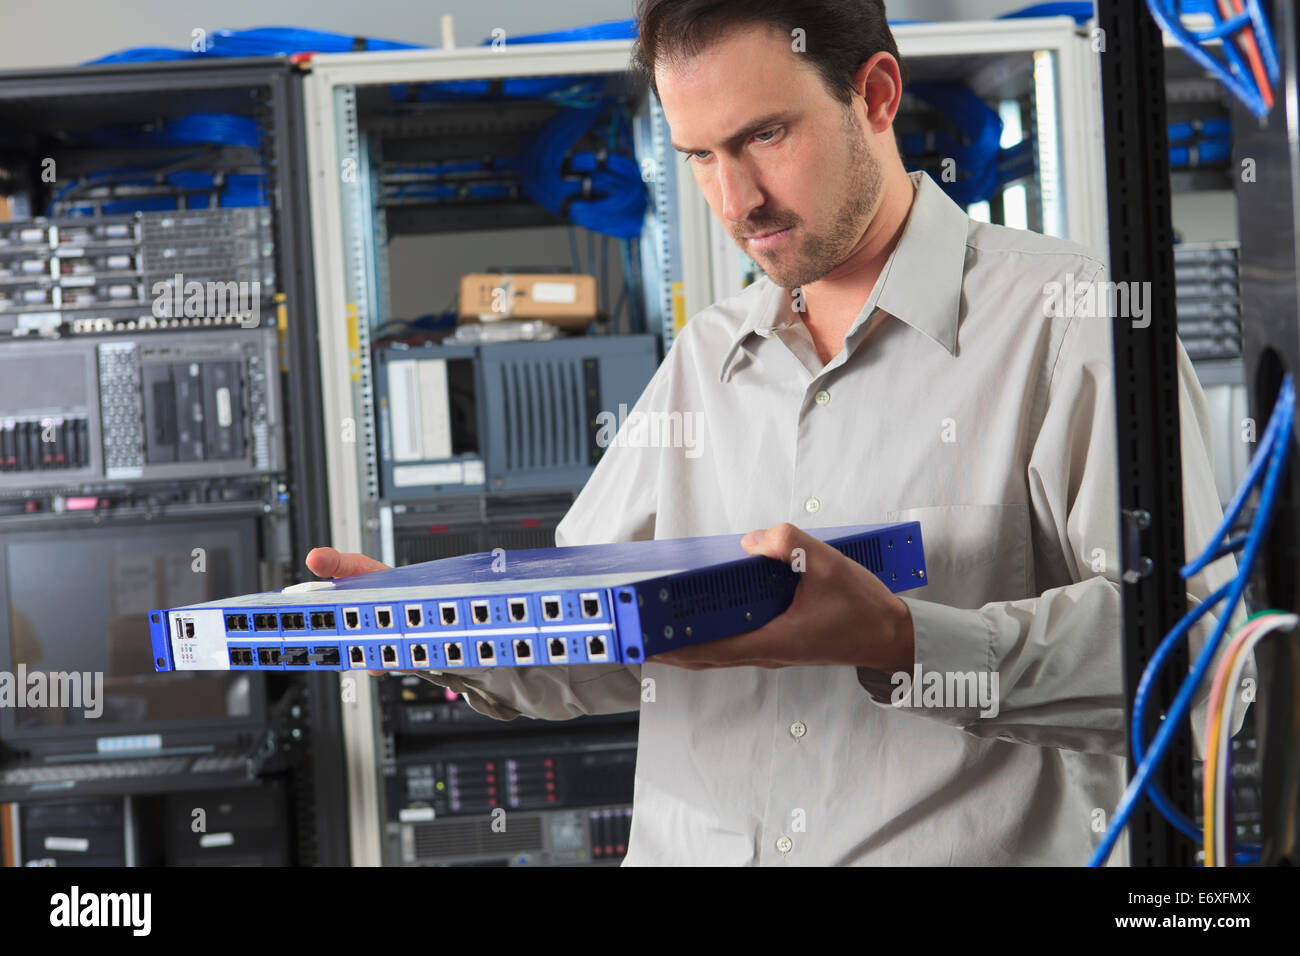 Network engineer examining switch in data center Stock Photo